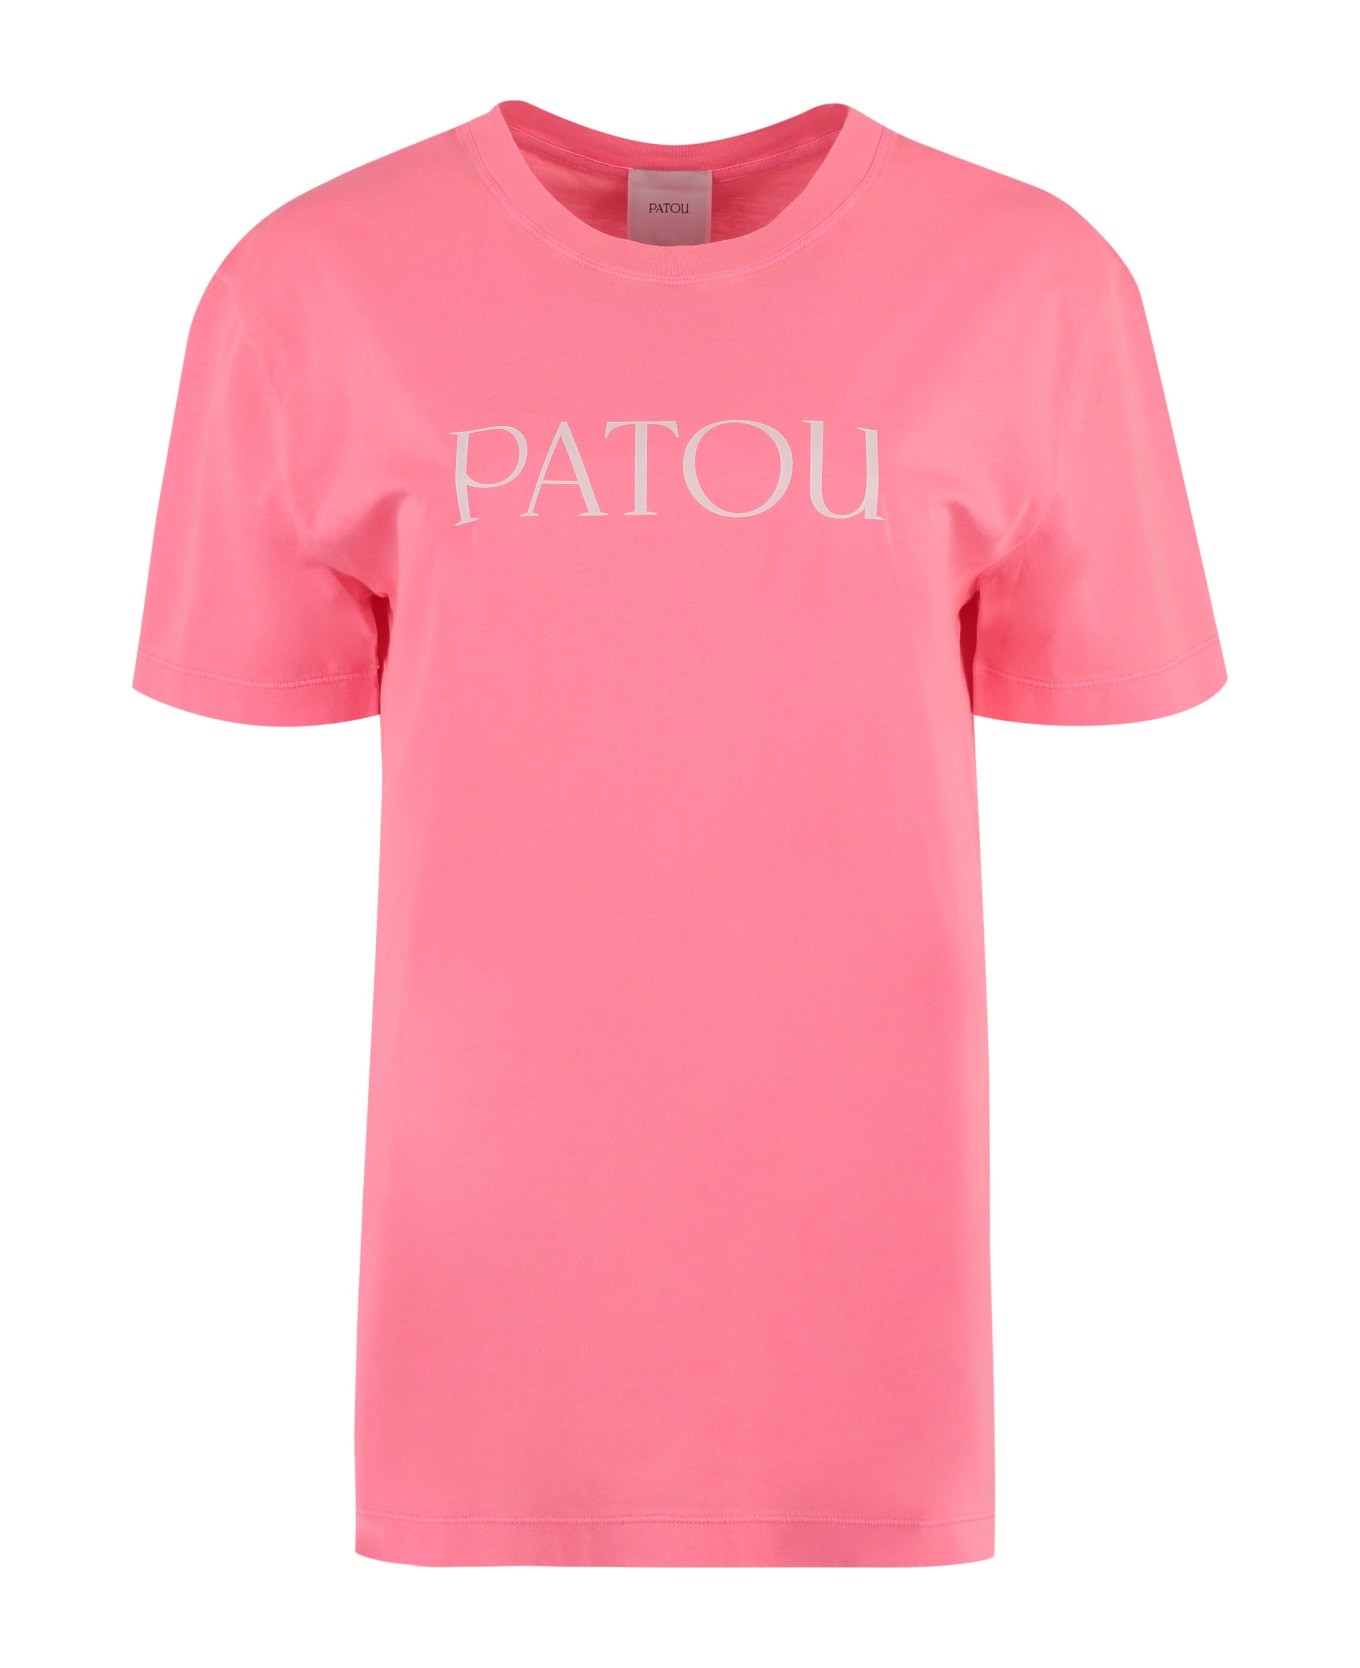 Patou Essential Logo Neon Pink Cotton T-shirt - Pink Tシャツ